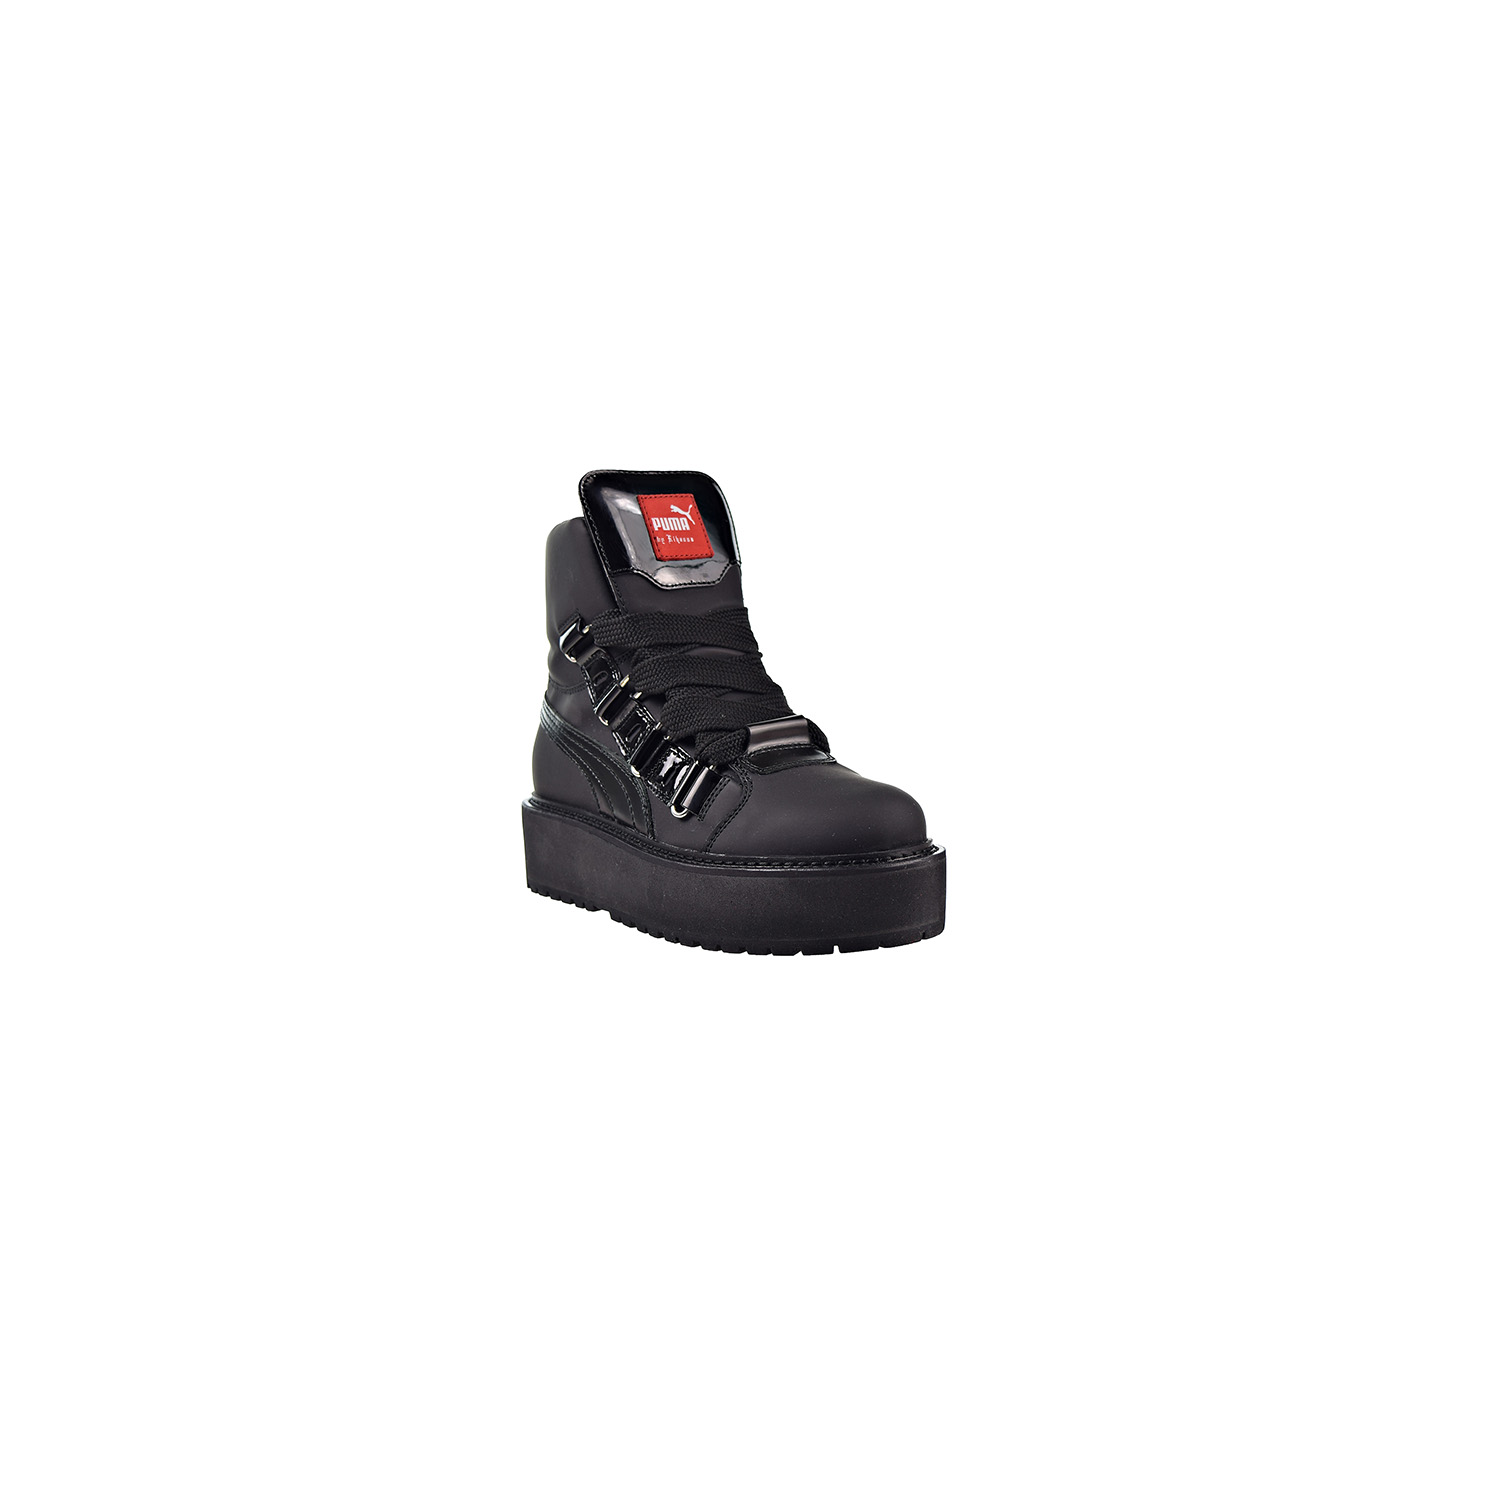 Puma Fenty By Rihanna Men's Platform Sneaker Boots Puma Black 363040-01 - image 2 of 6